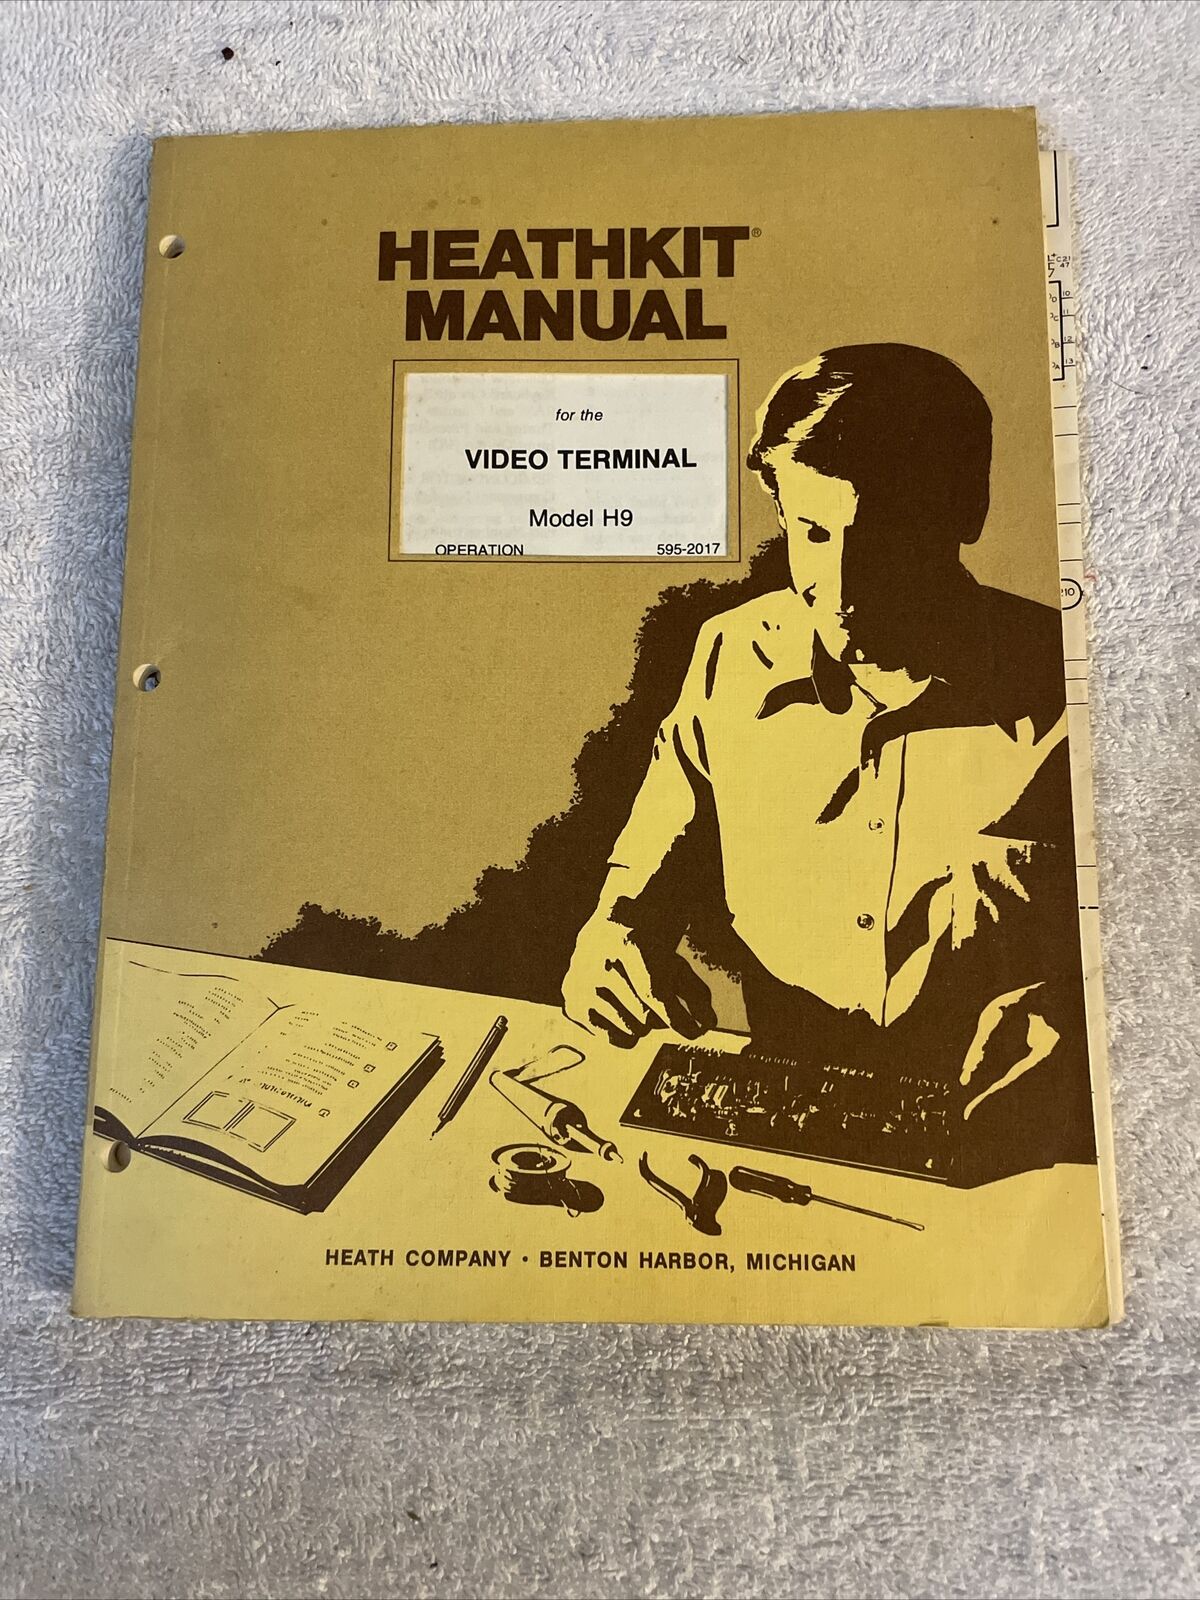 Vintage 70's Heathkit Manual Video Terminal H9 Operation 595-2017